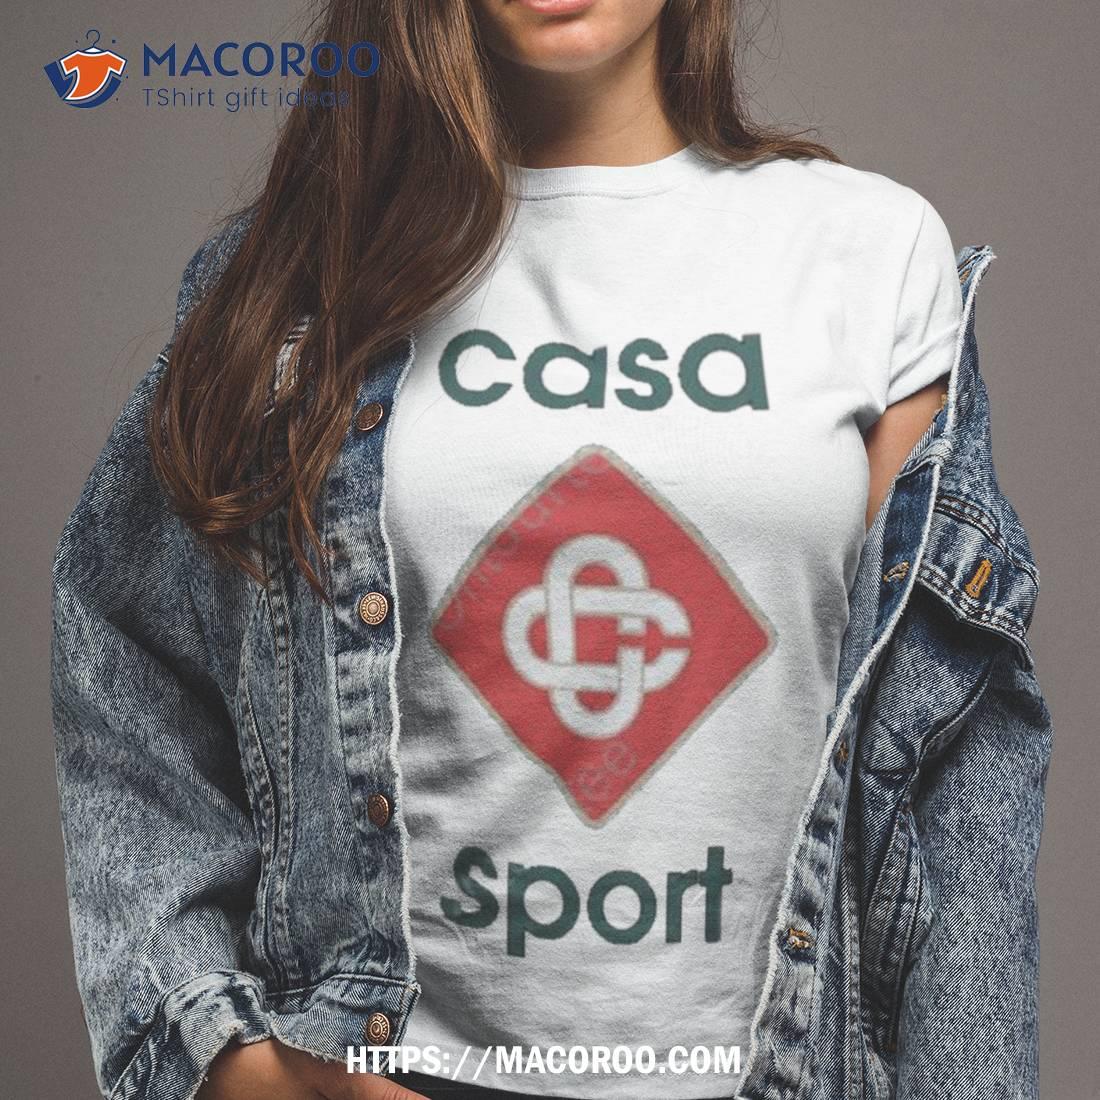 Harrods Merch Louis Tomlinson Casablanca Casa Sport Shirt Tshirt 2